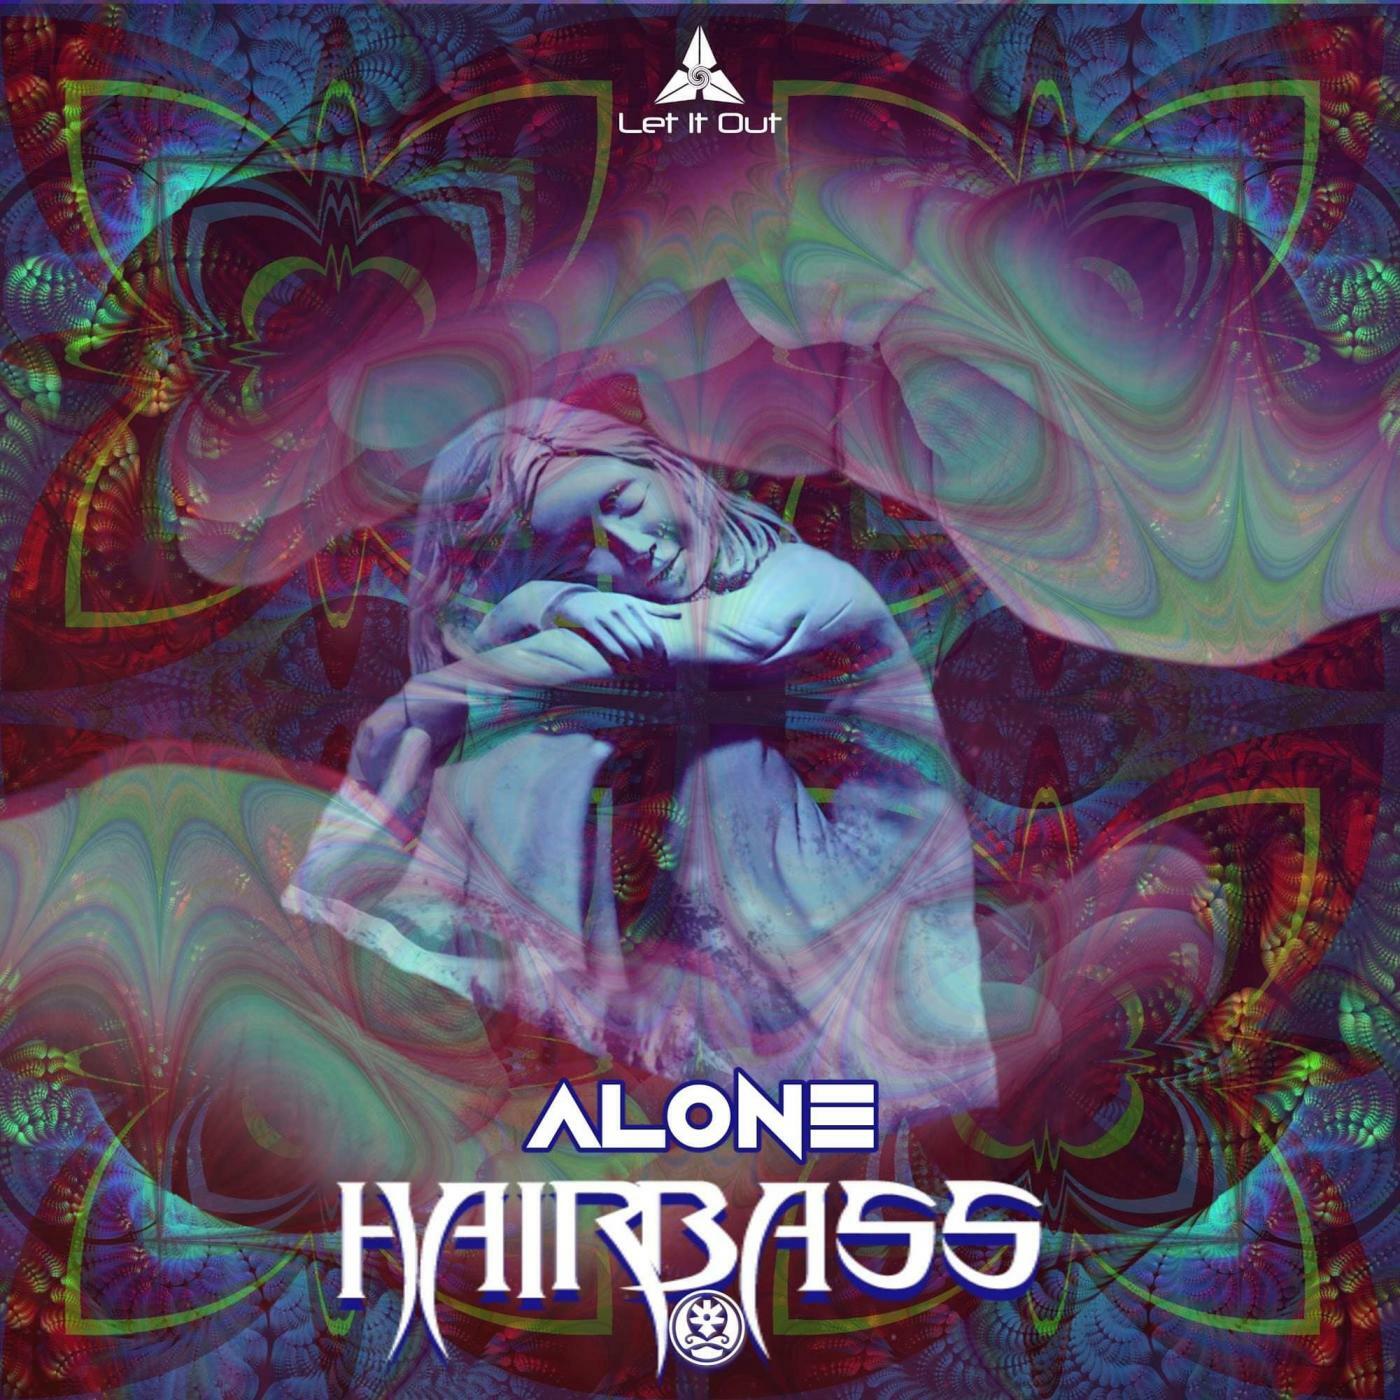 Hairbass Alone Iheart